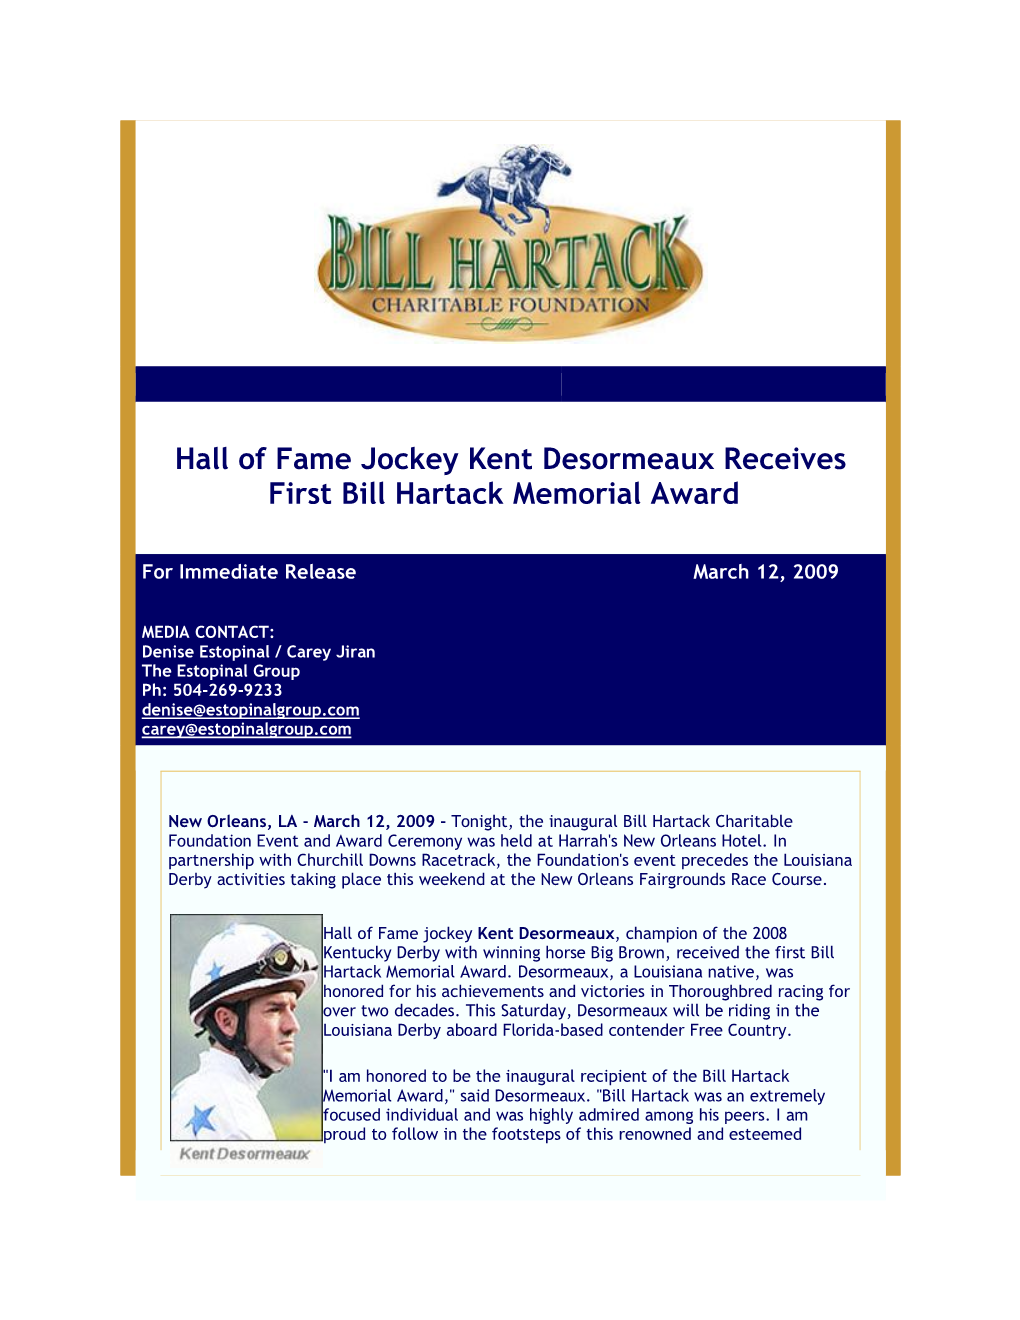 Hall of Fame Jockey Kent Desormeaux Receives First Bill Hartack Memorial Award